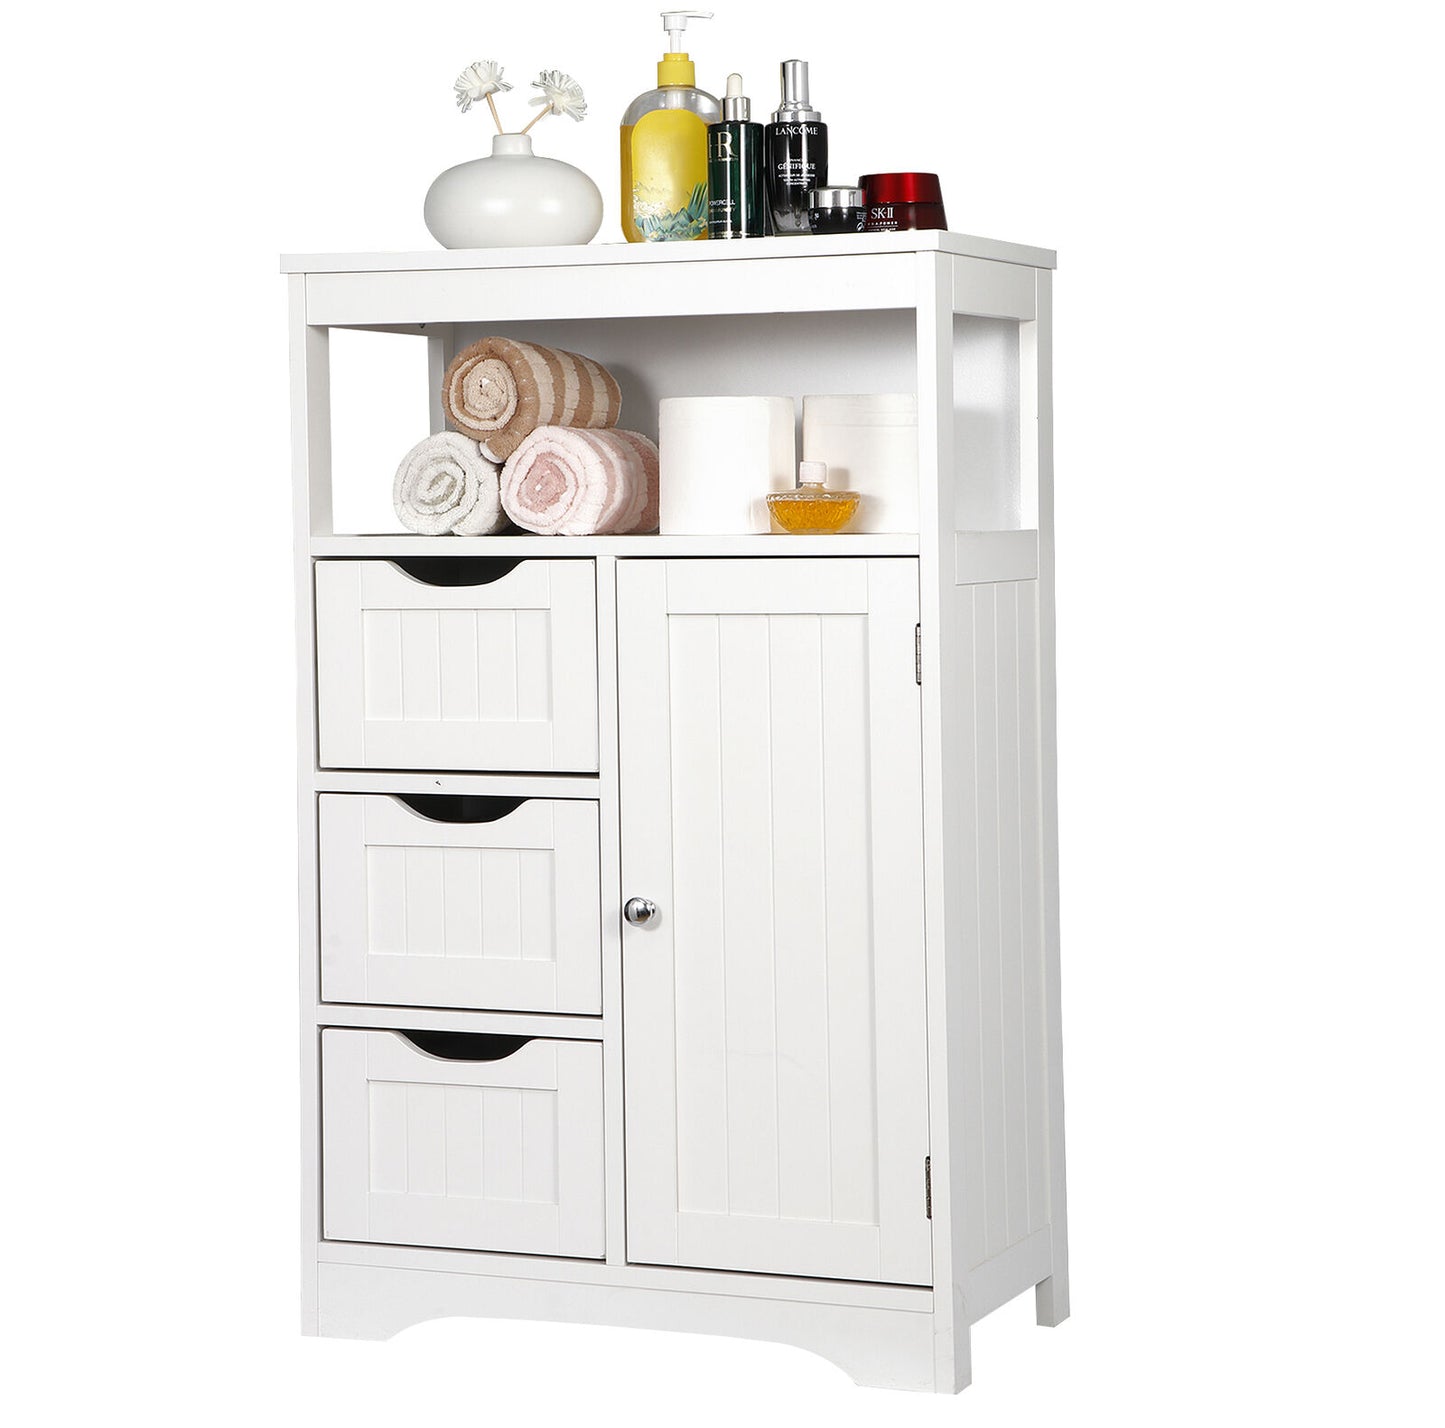 Bathroom Floor Cabinet Wooden Storage Organizer with 1 Door and 3 Drawers White